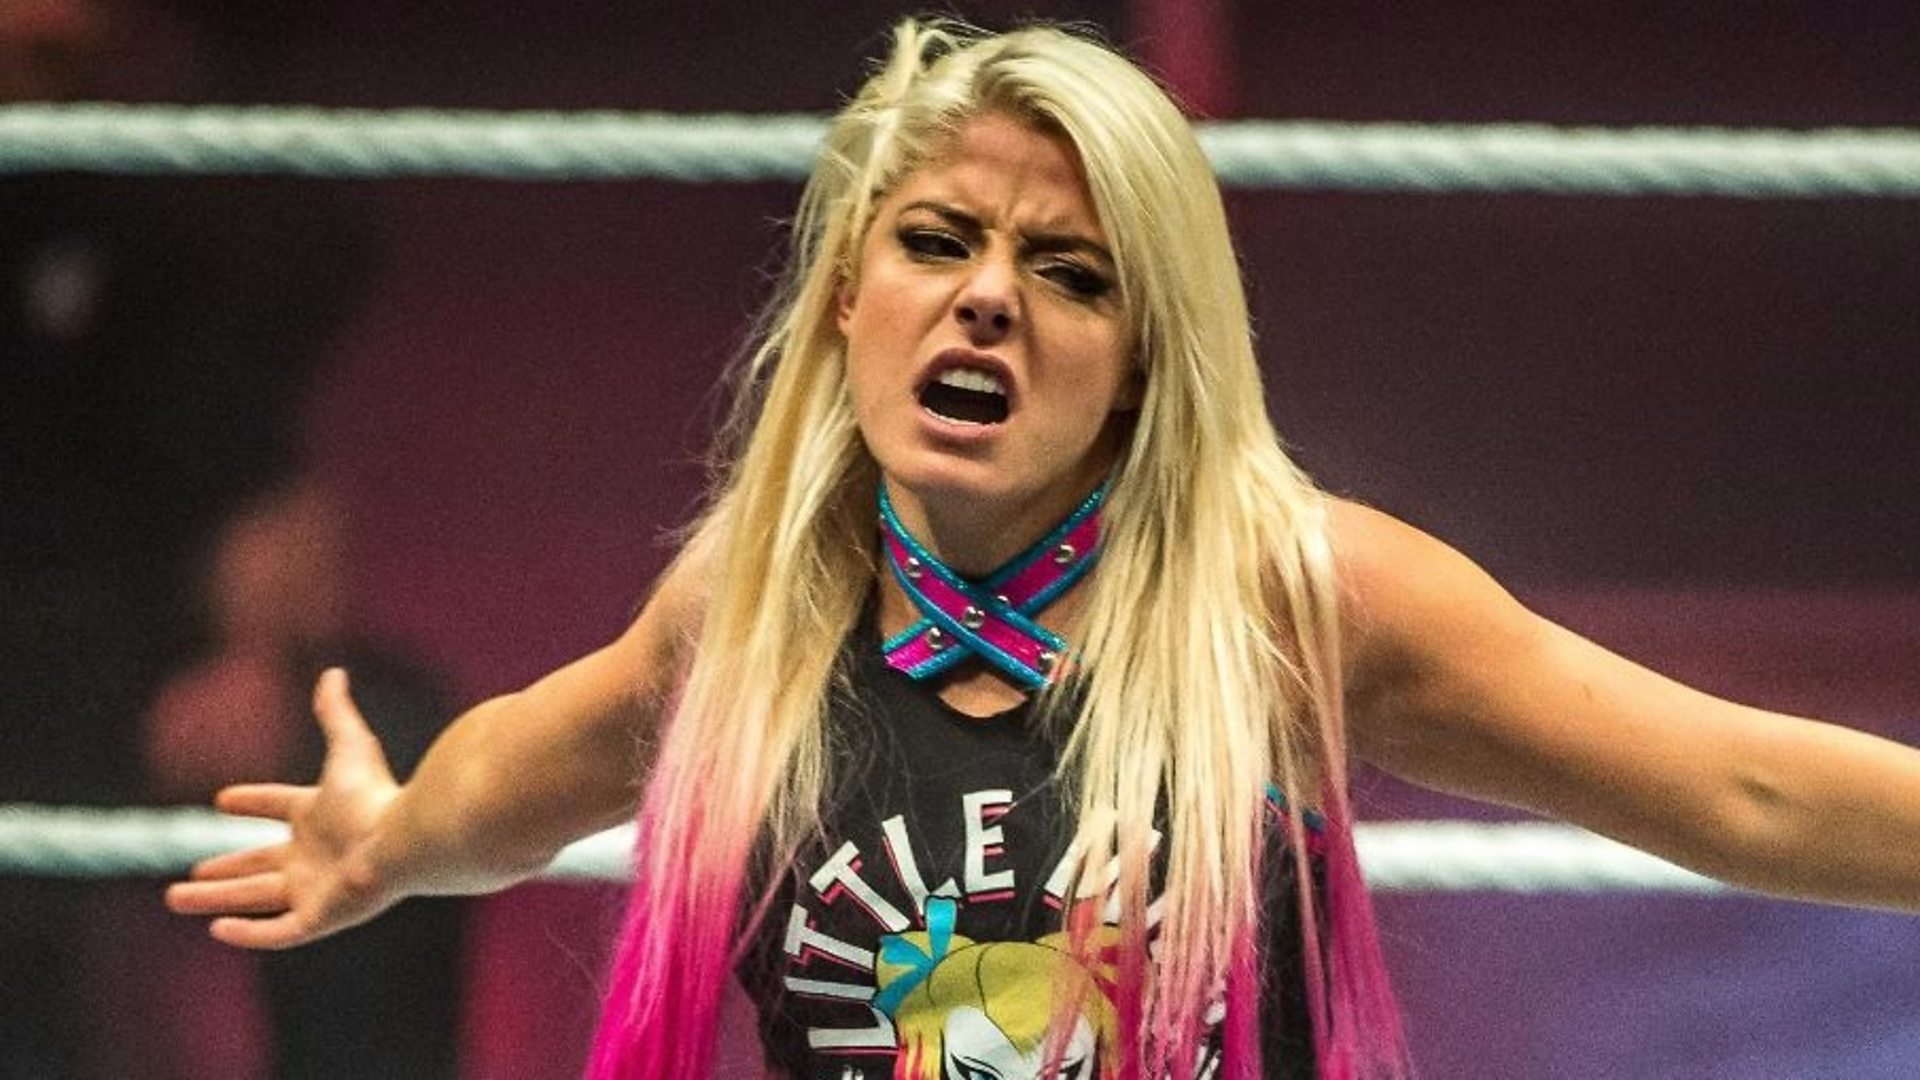 WWE's Alexa Bliss' tips for becoming a wrestler - BBC News